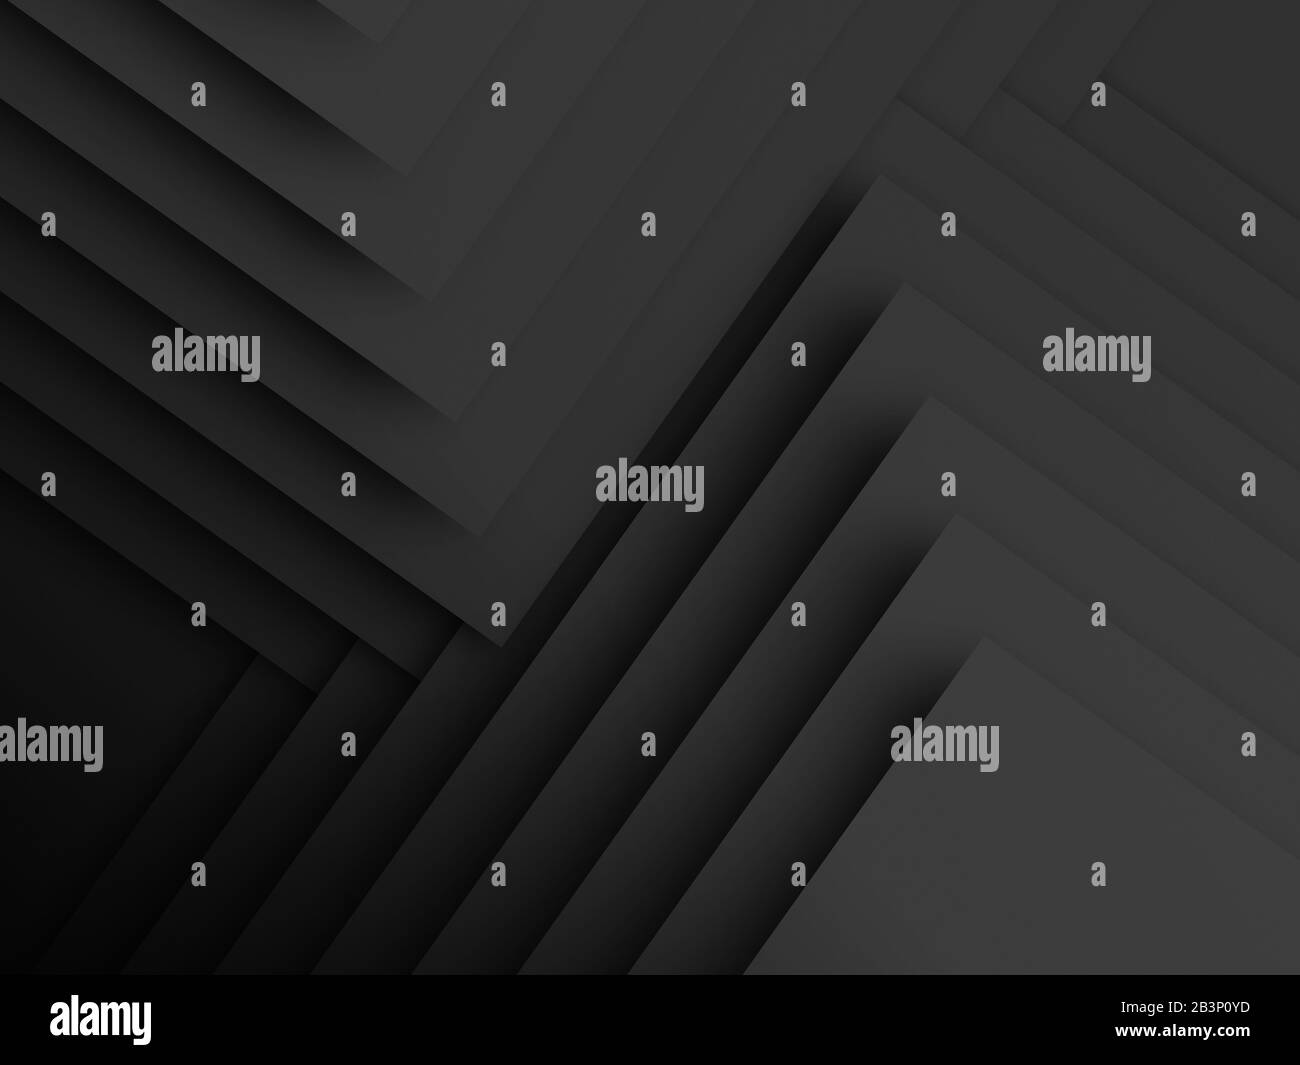 Minimalist black background, abstract geometric pattern of corners. 3d rendering illustration Stock Photo